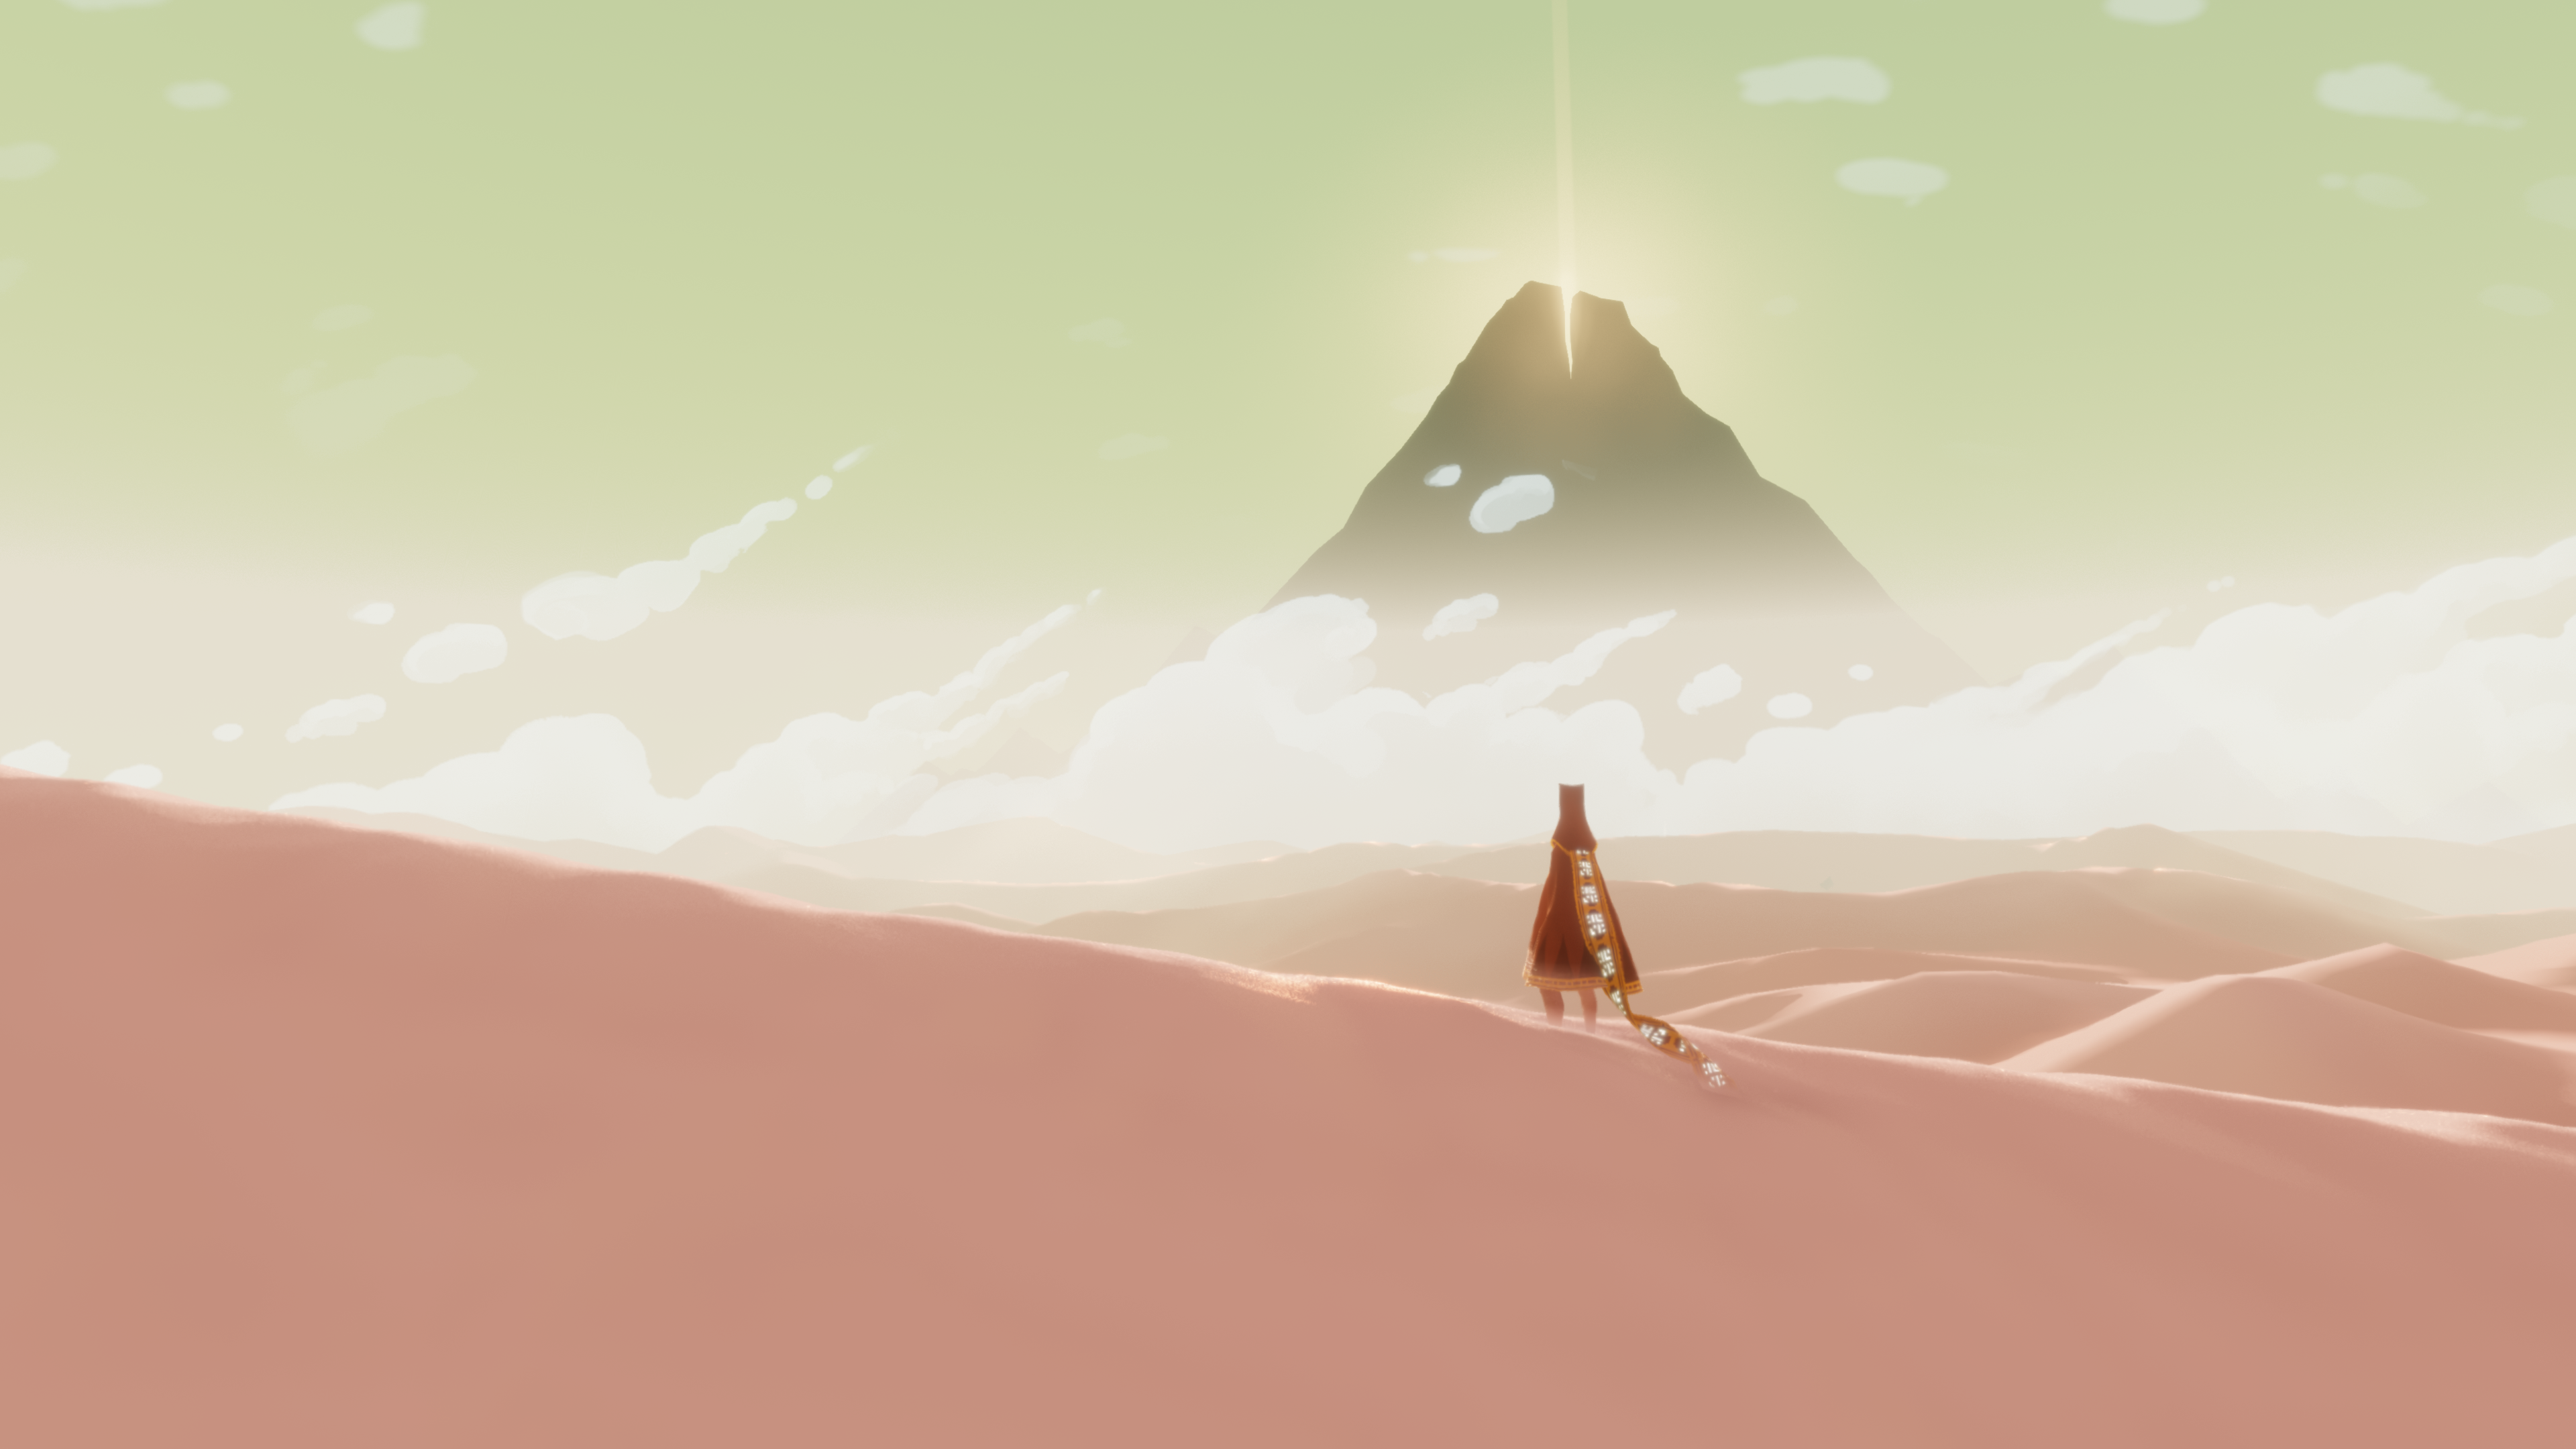 Journey (thatgamecompany, 2012)